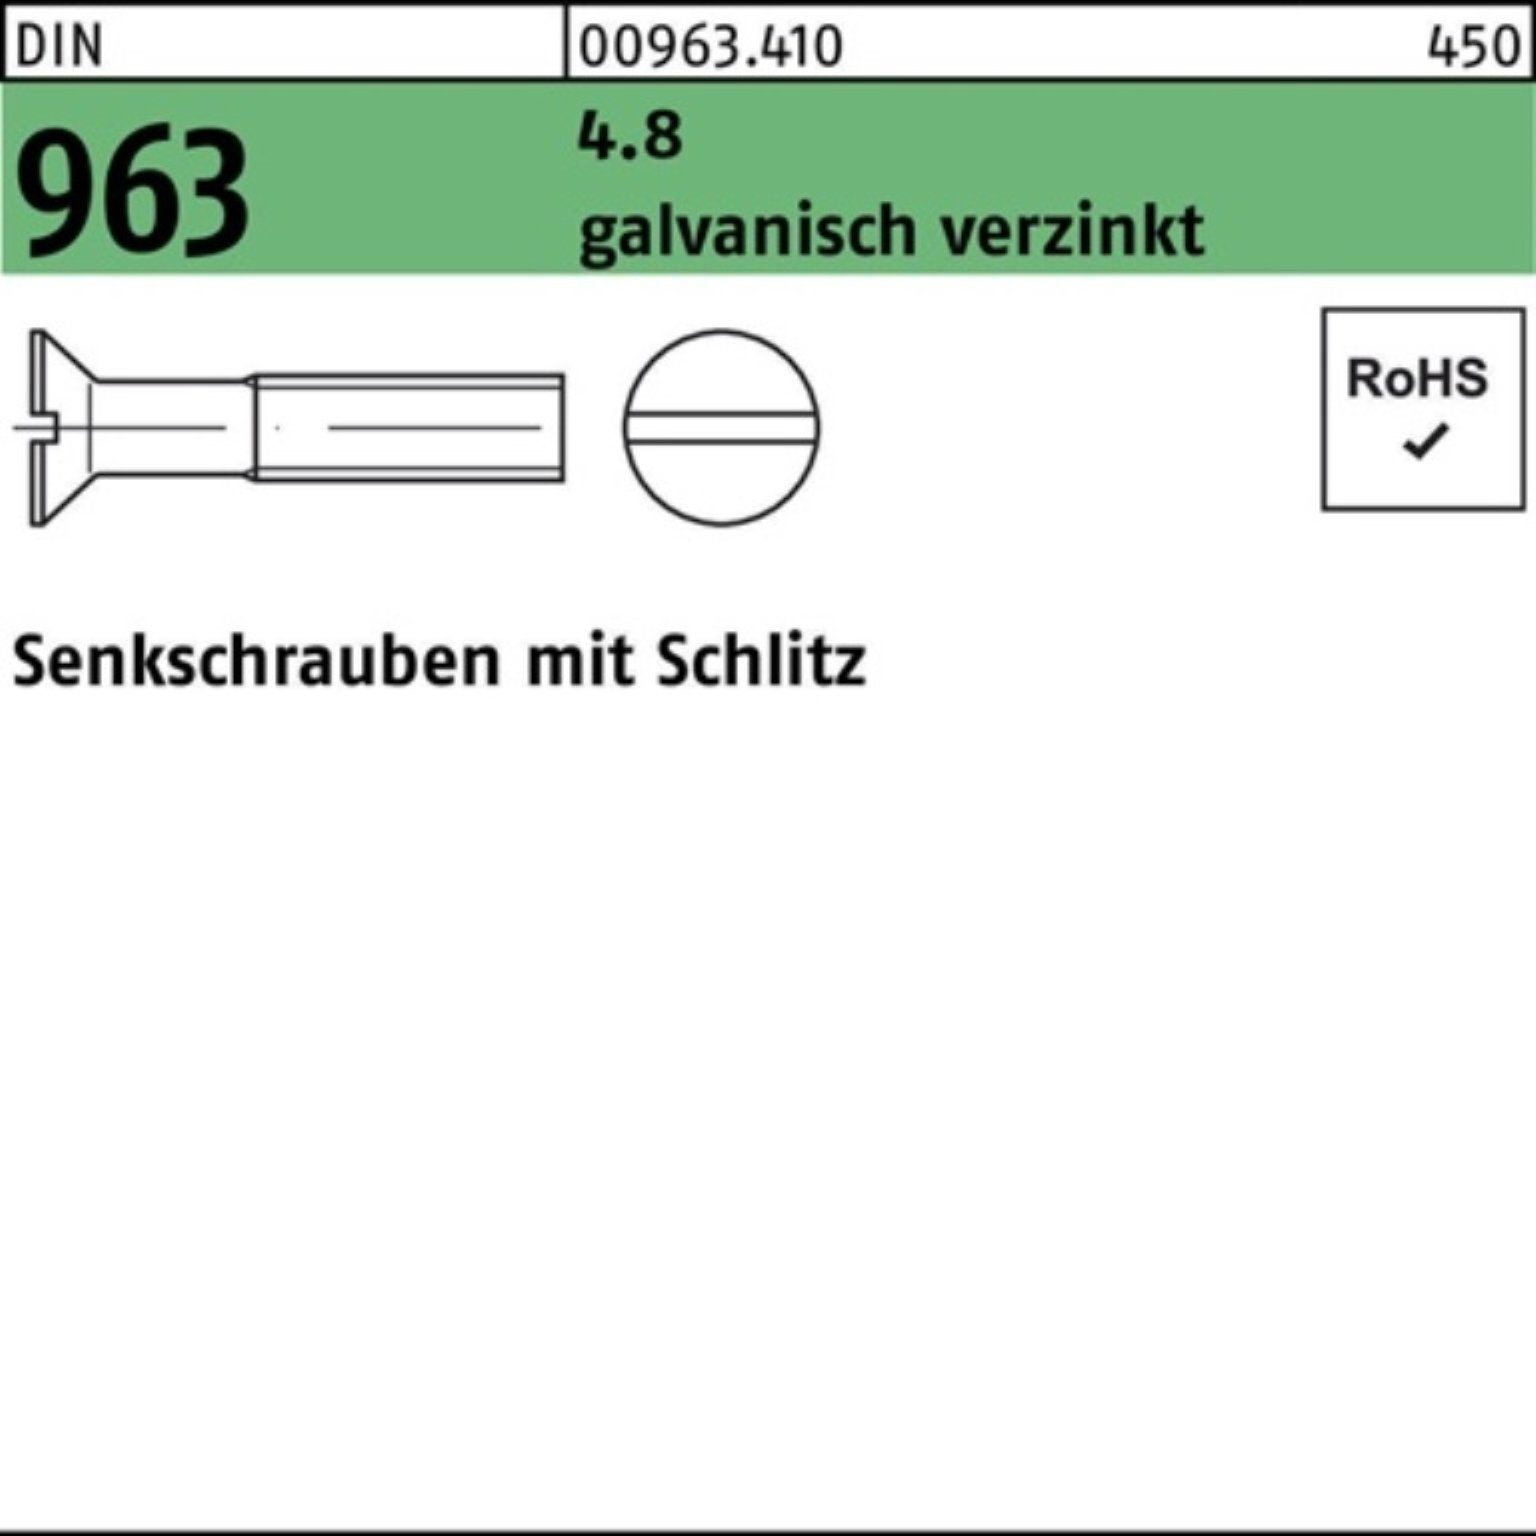 Reyher Senkschraube 100er Pack Senkschraube DIN 963 Schlitz M12x 55 4.8 galv.verz. 50 Stü